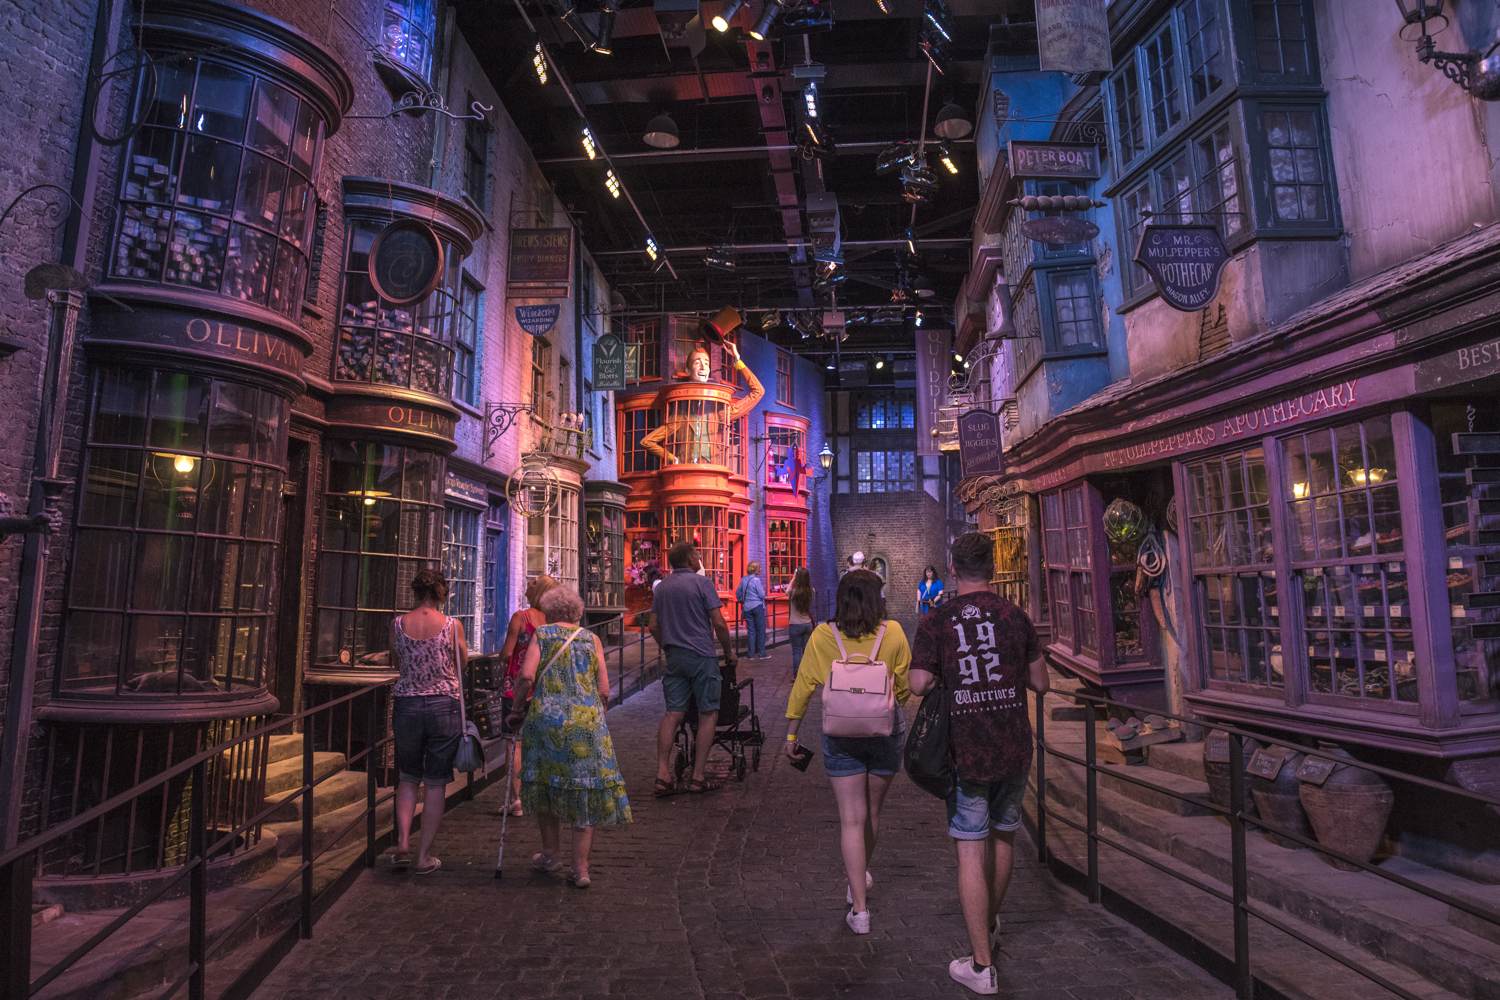 Harry Potter studio tour - Diagon Alley